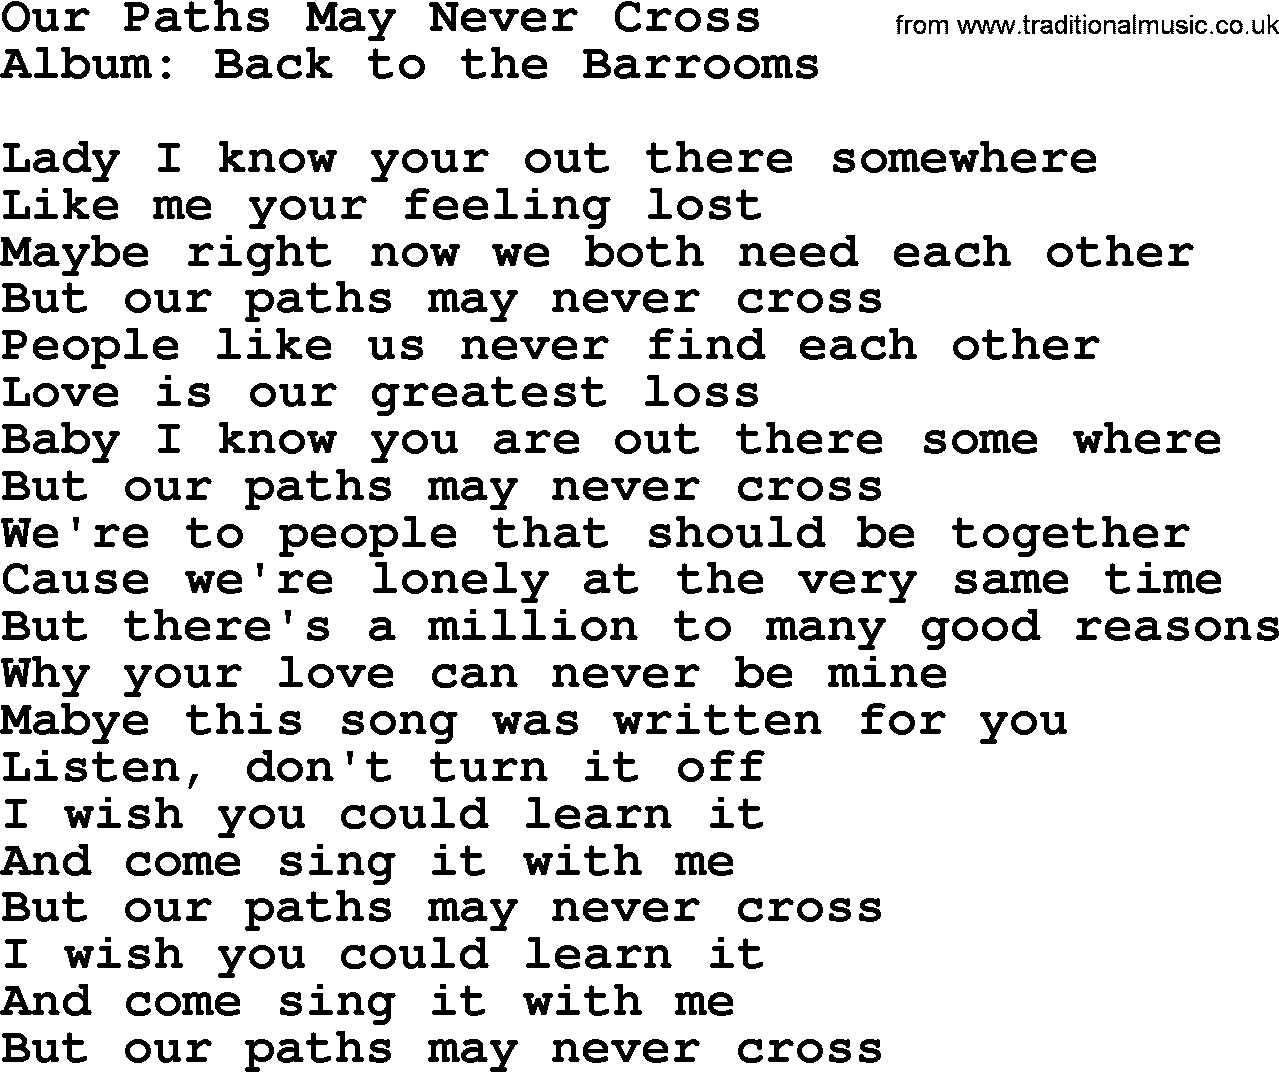 Merle Haggard song: Our Paths May Never Cross, lyrics.